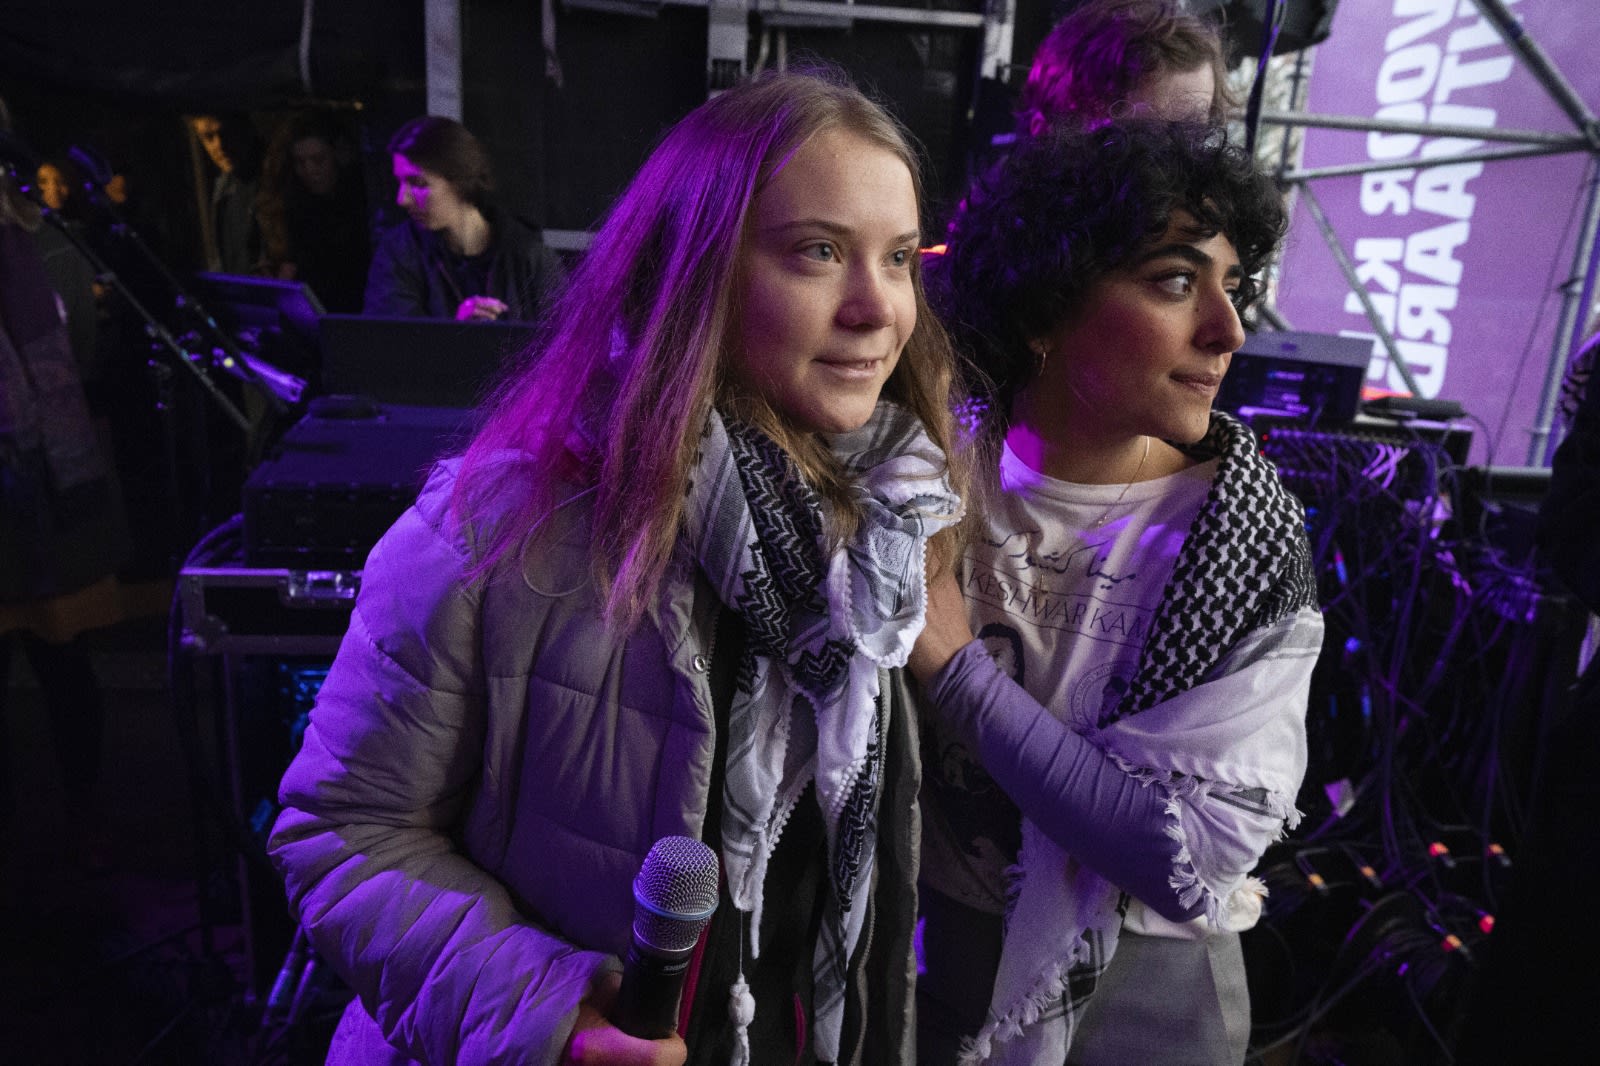 Greta Thunberg zaterdag bij blokkade A12 in Den Haag